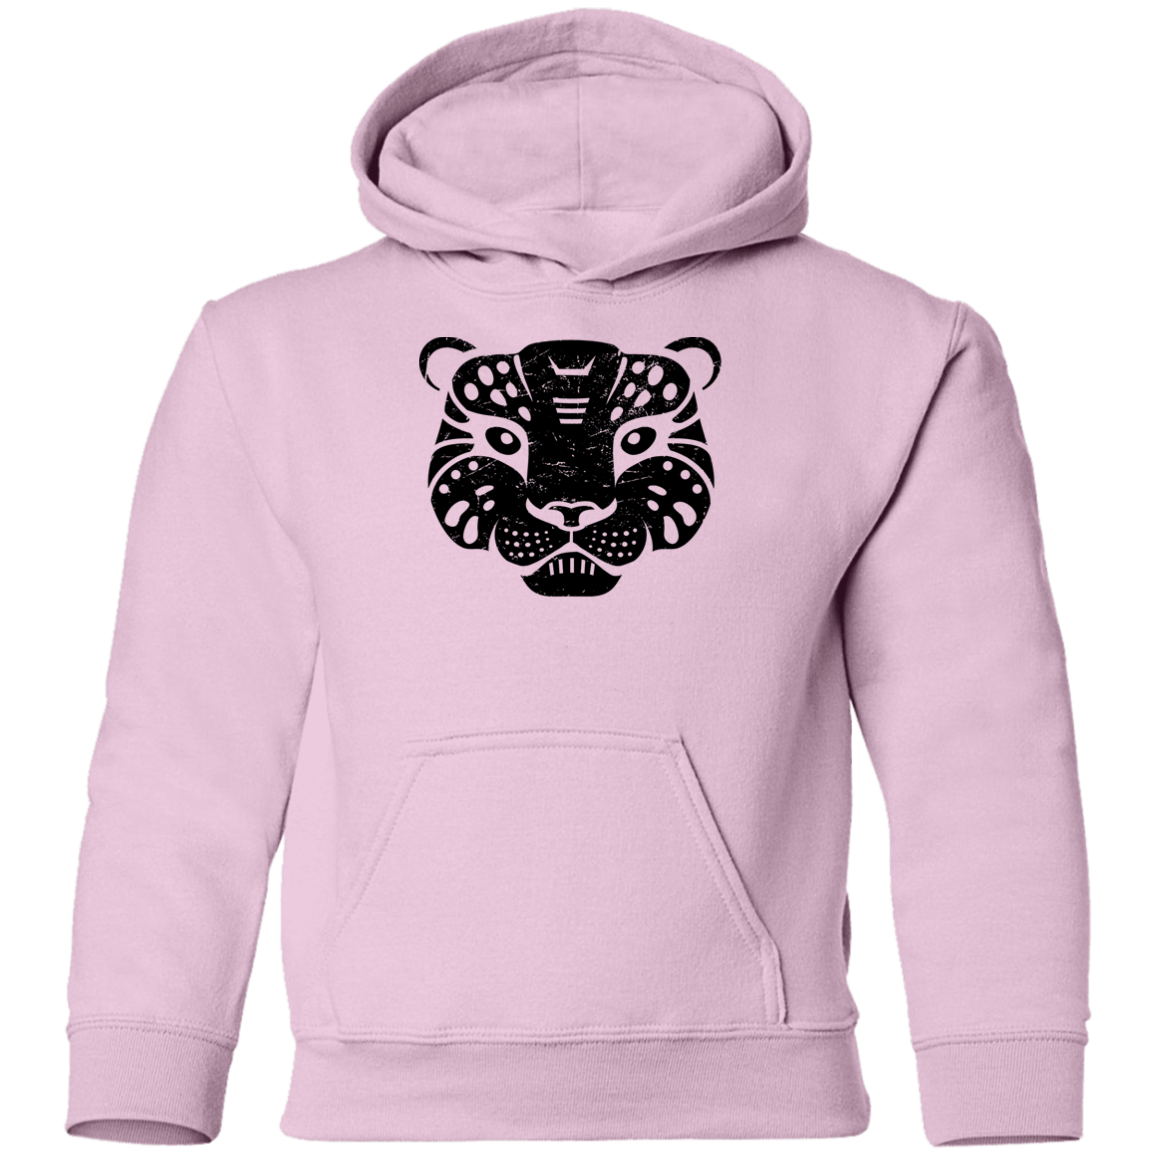 Black Distressed Emblem Hoodies for Kids (Snow Leopard/Denali)